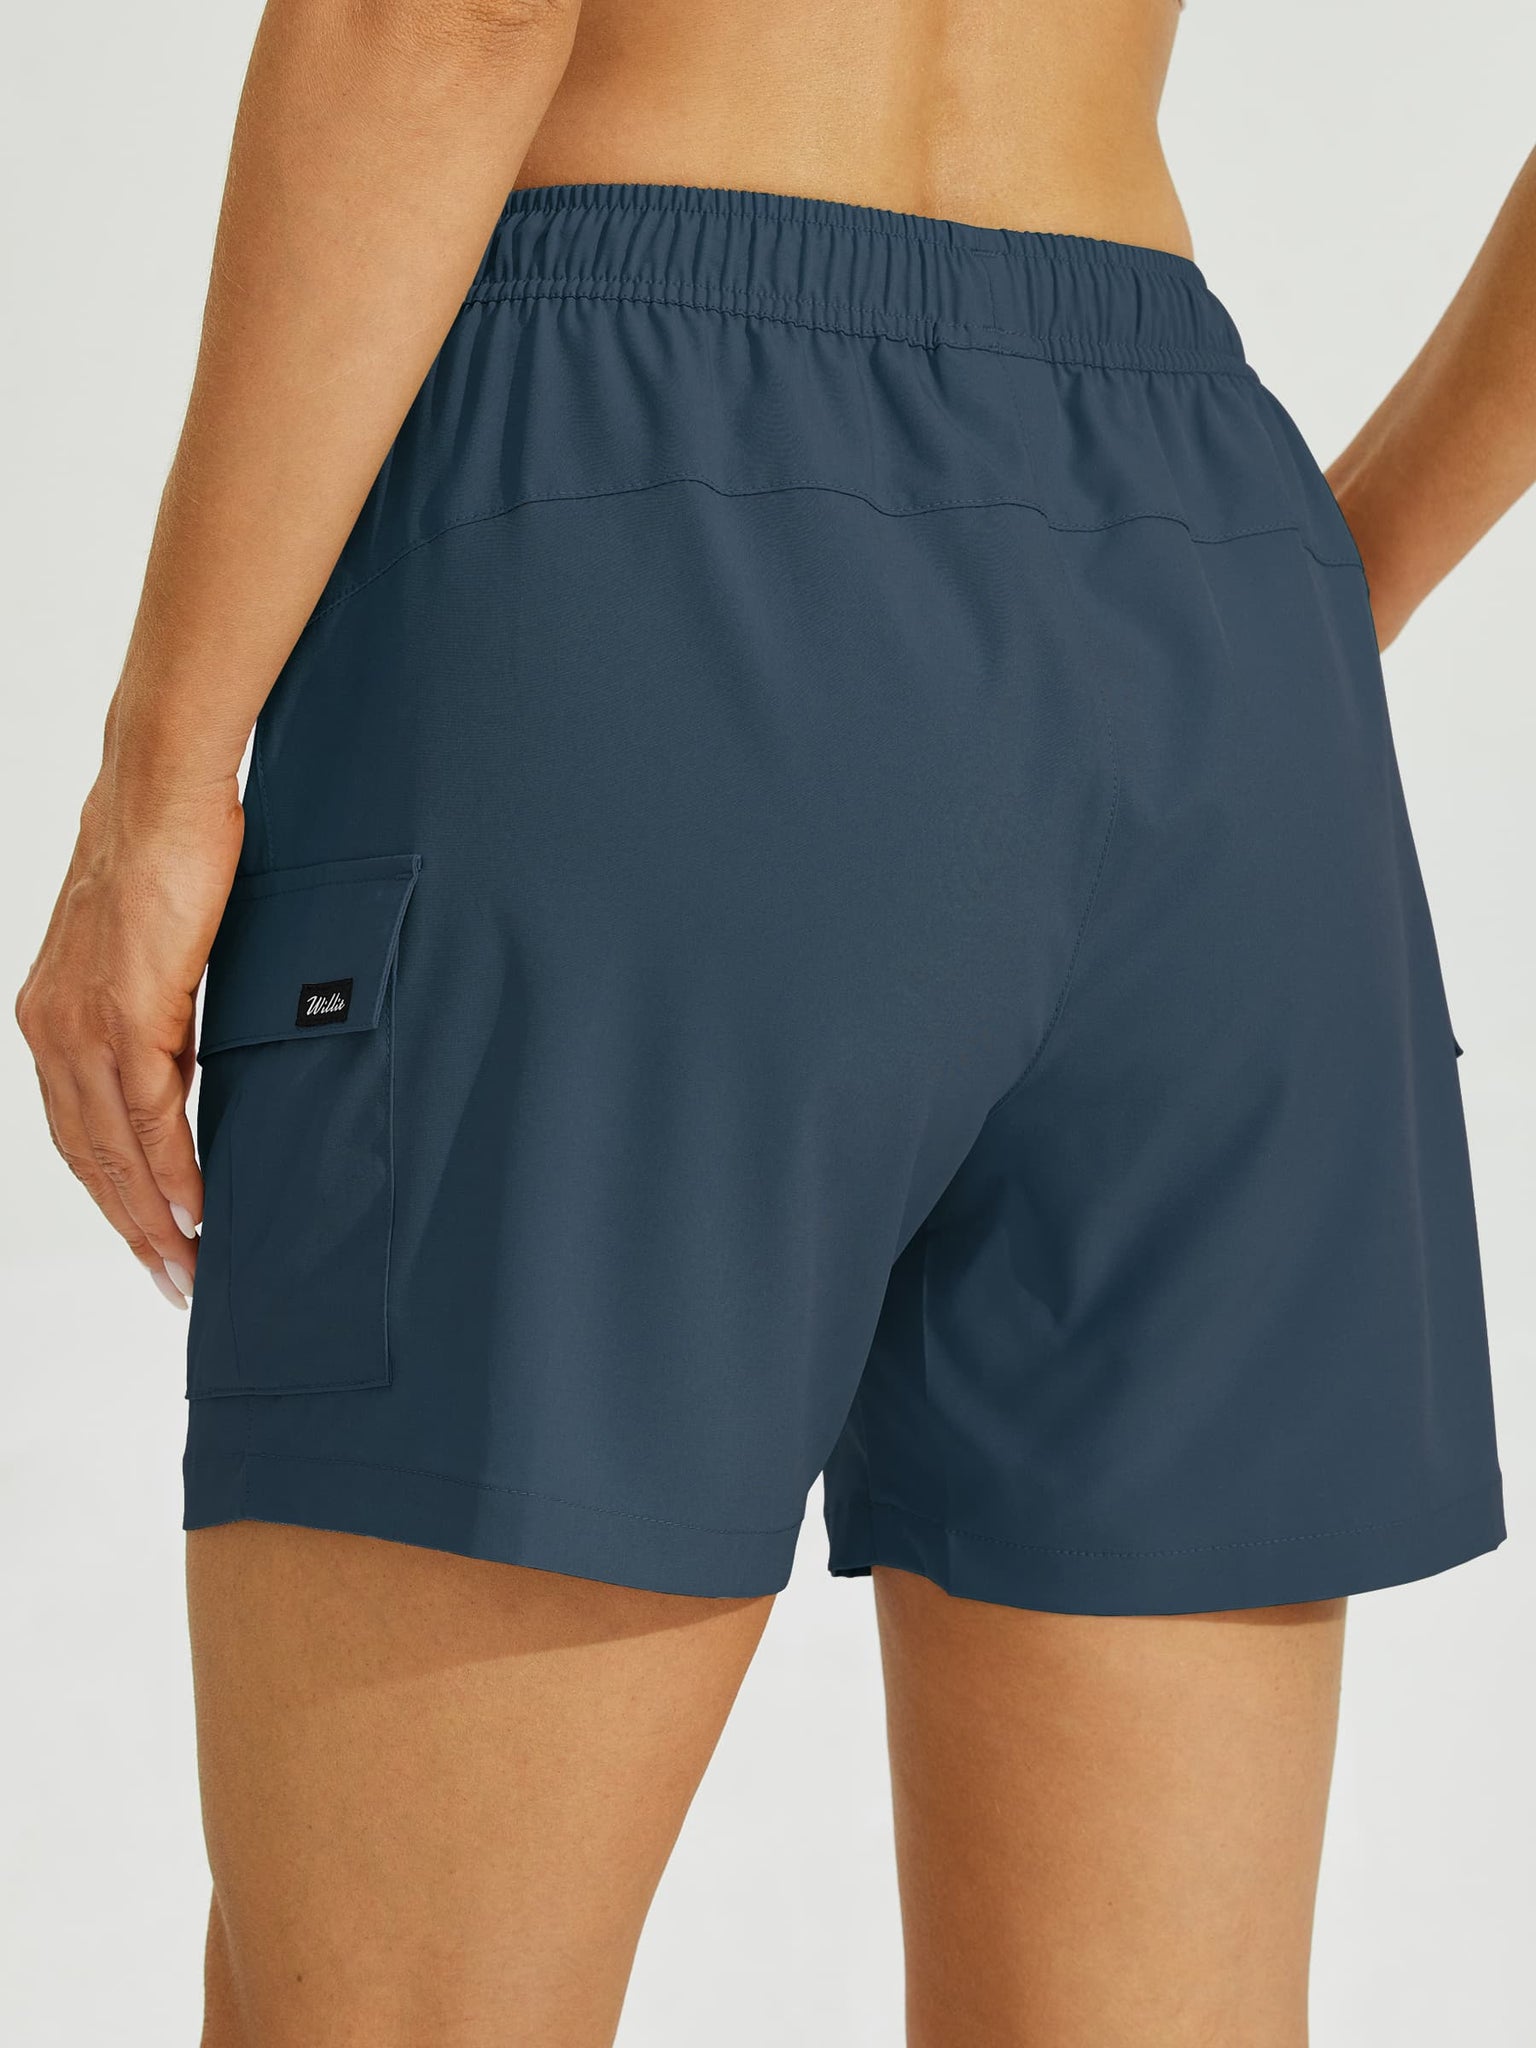 Women's Hiking Athletic Shorts